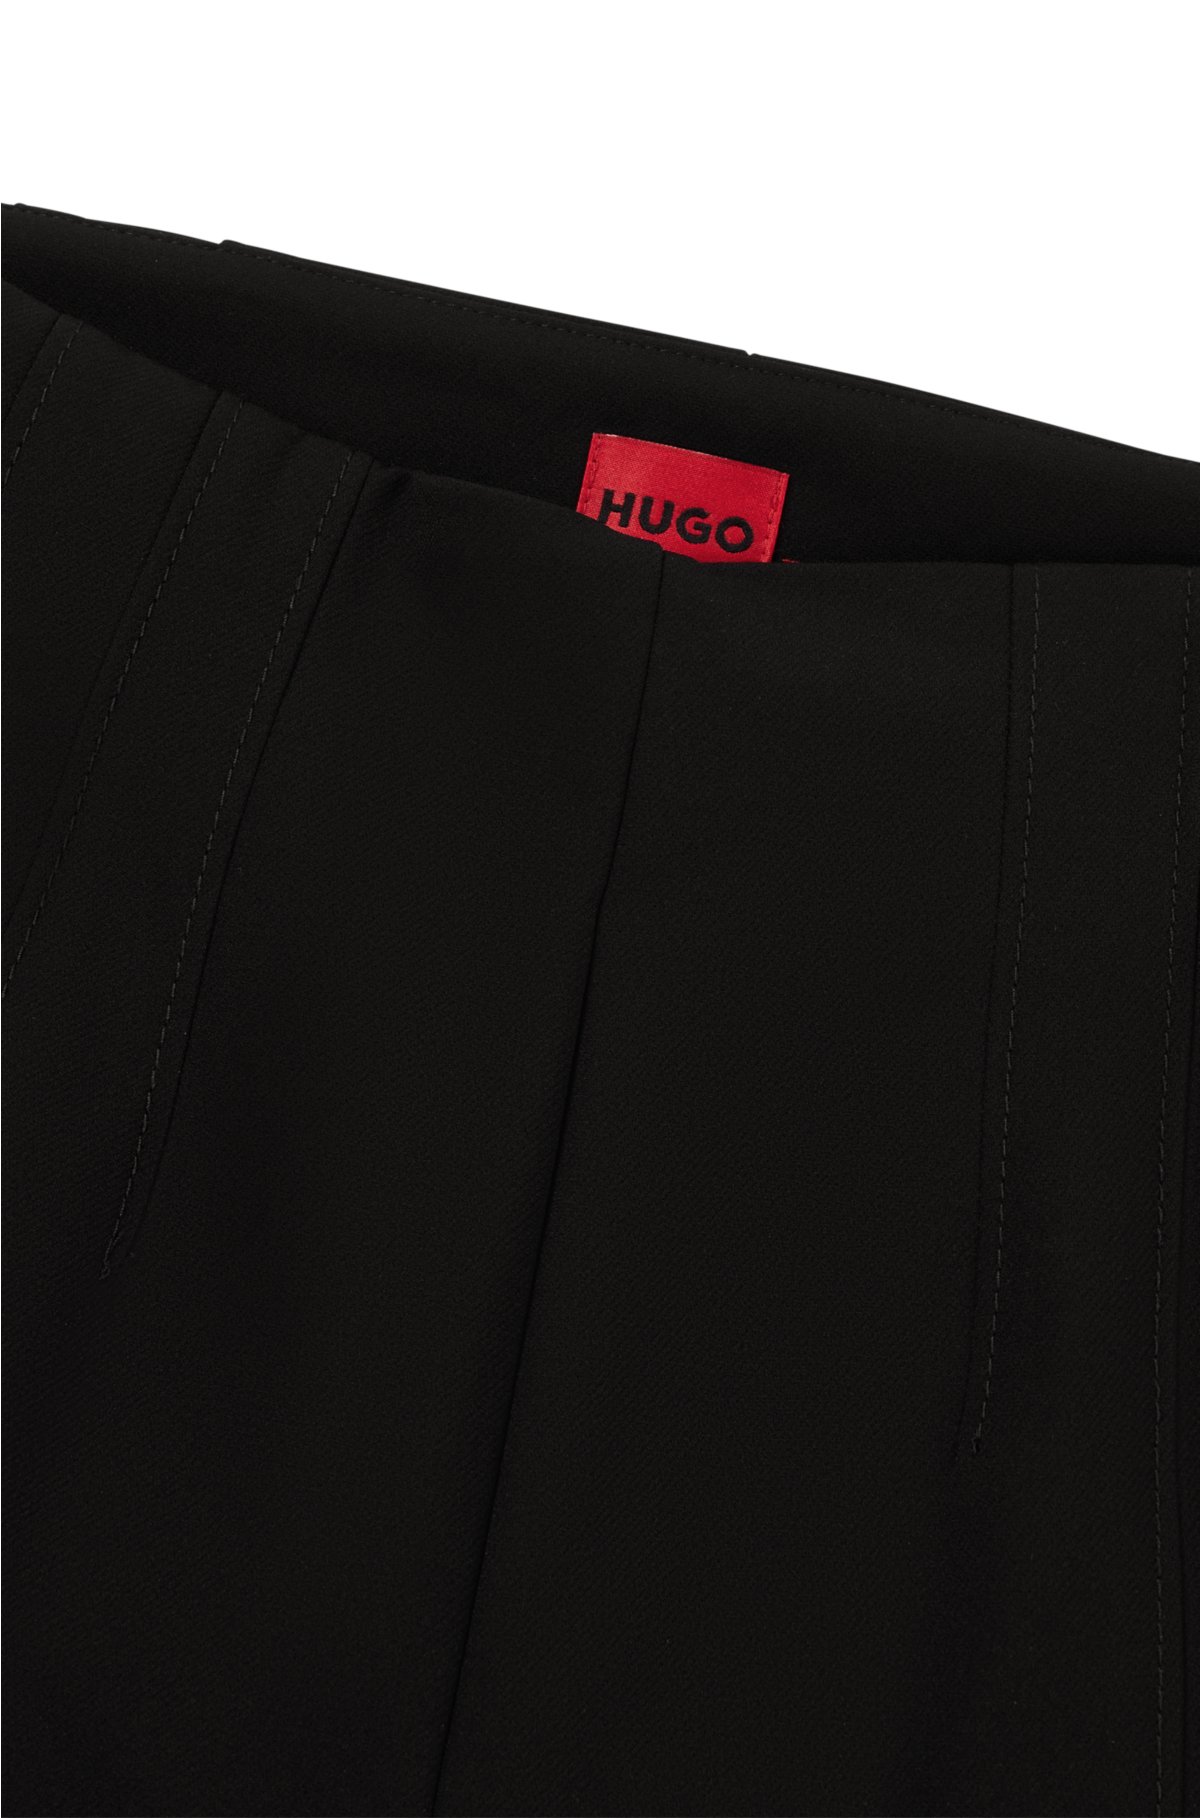 HUGO - Slim-Fit Hose aus elastischem Material-Mix mit hohem Bund | Jogginghosen